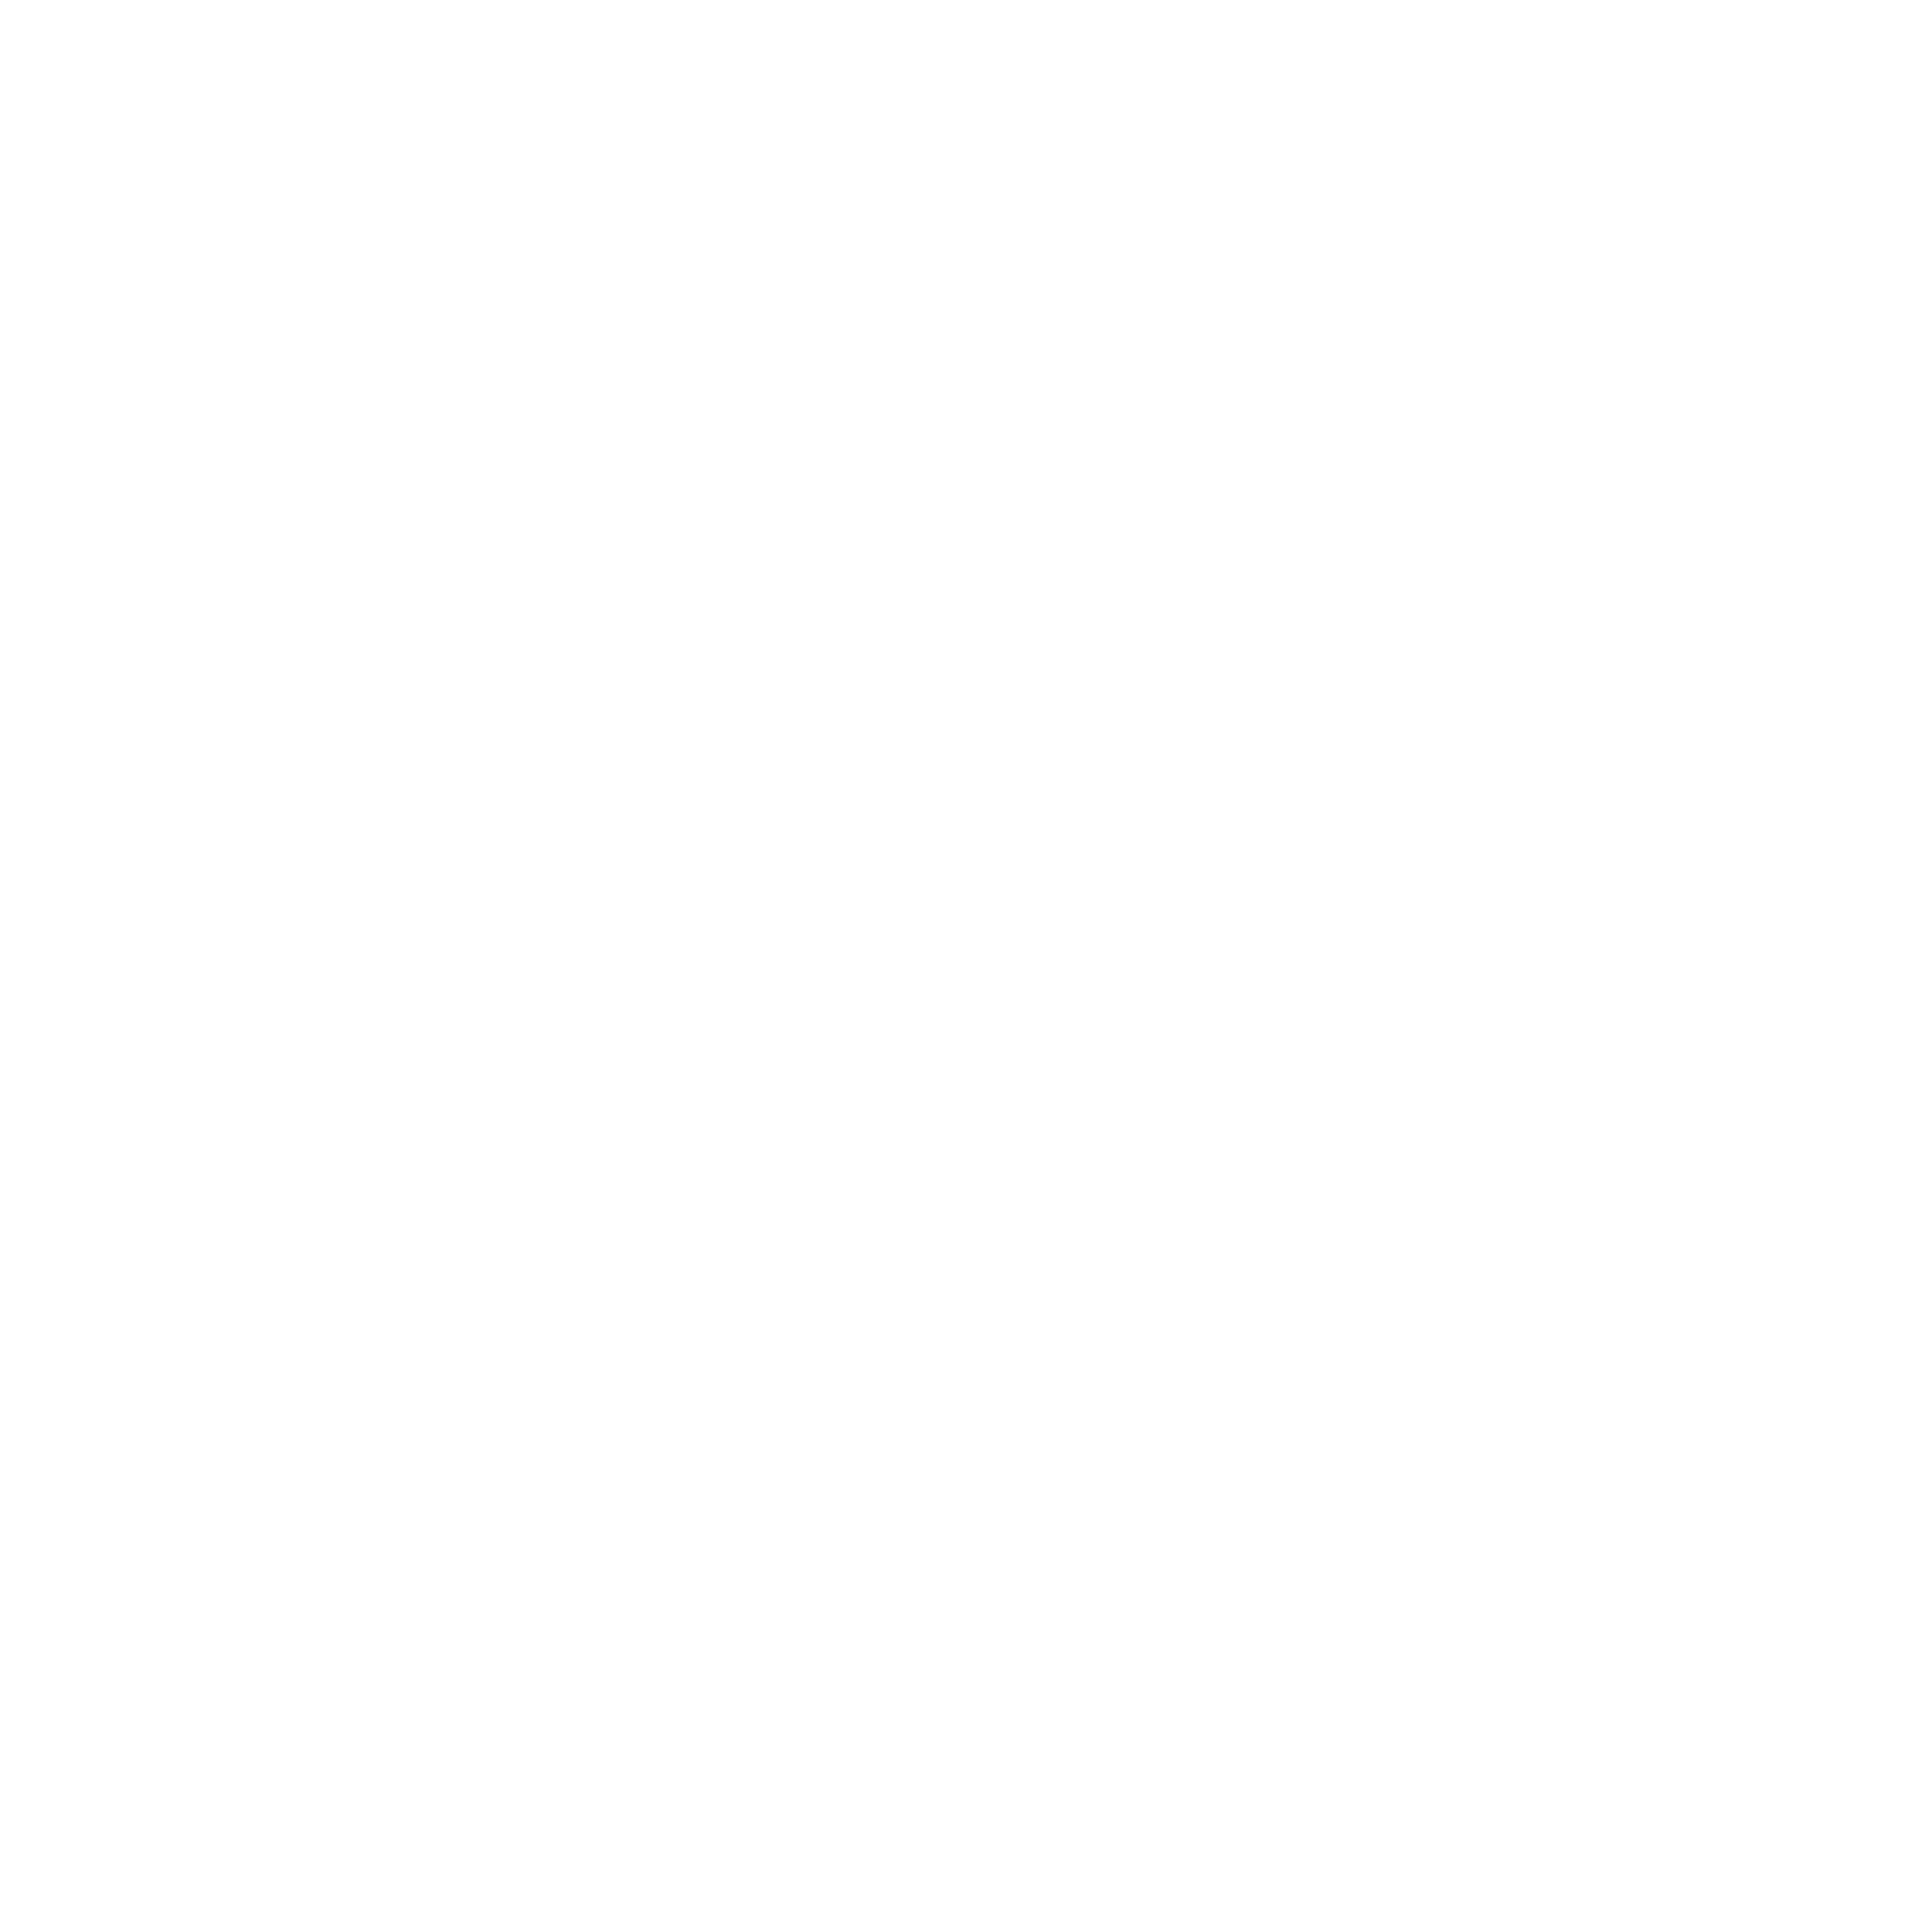 Cockroach International Production